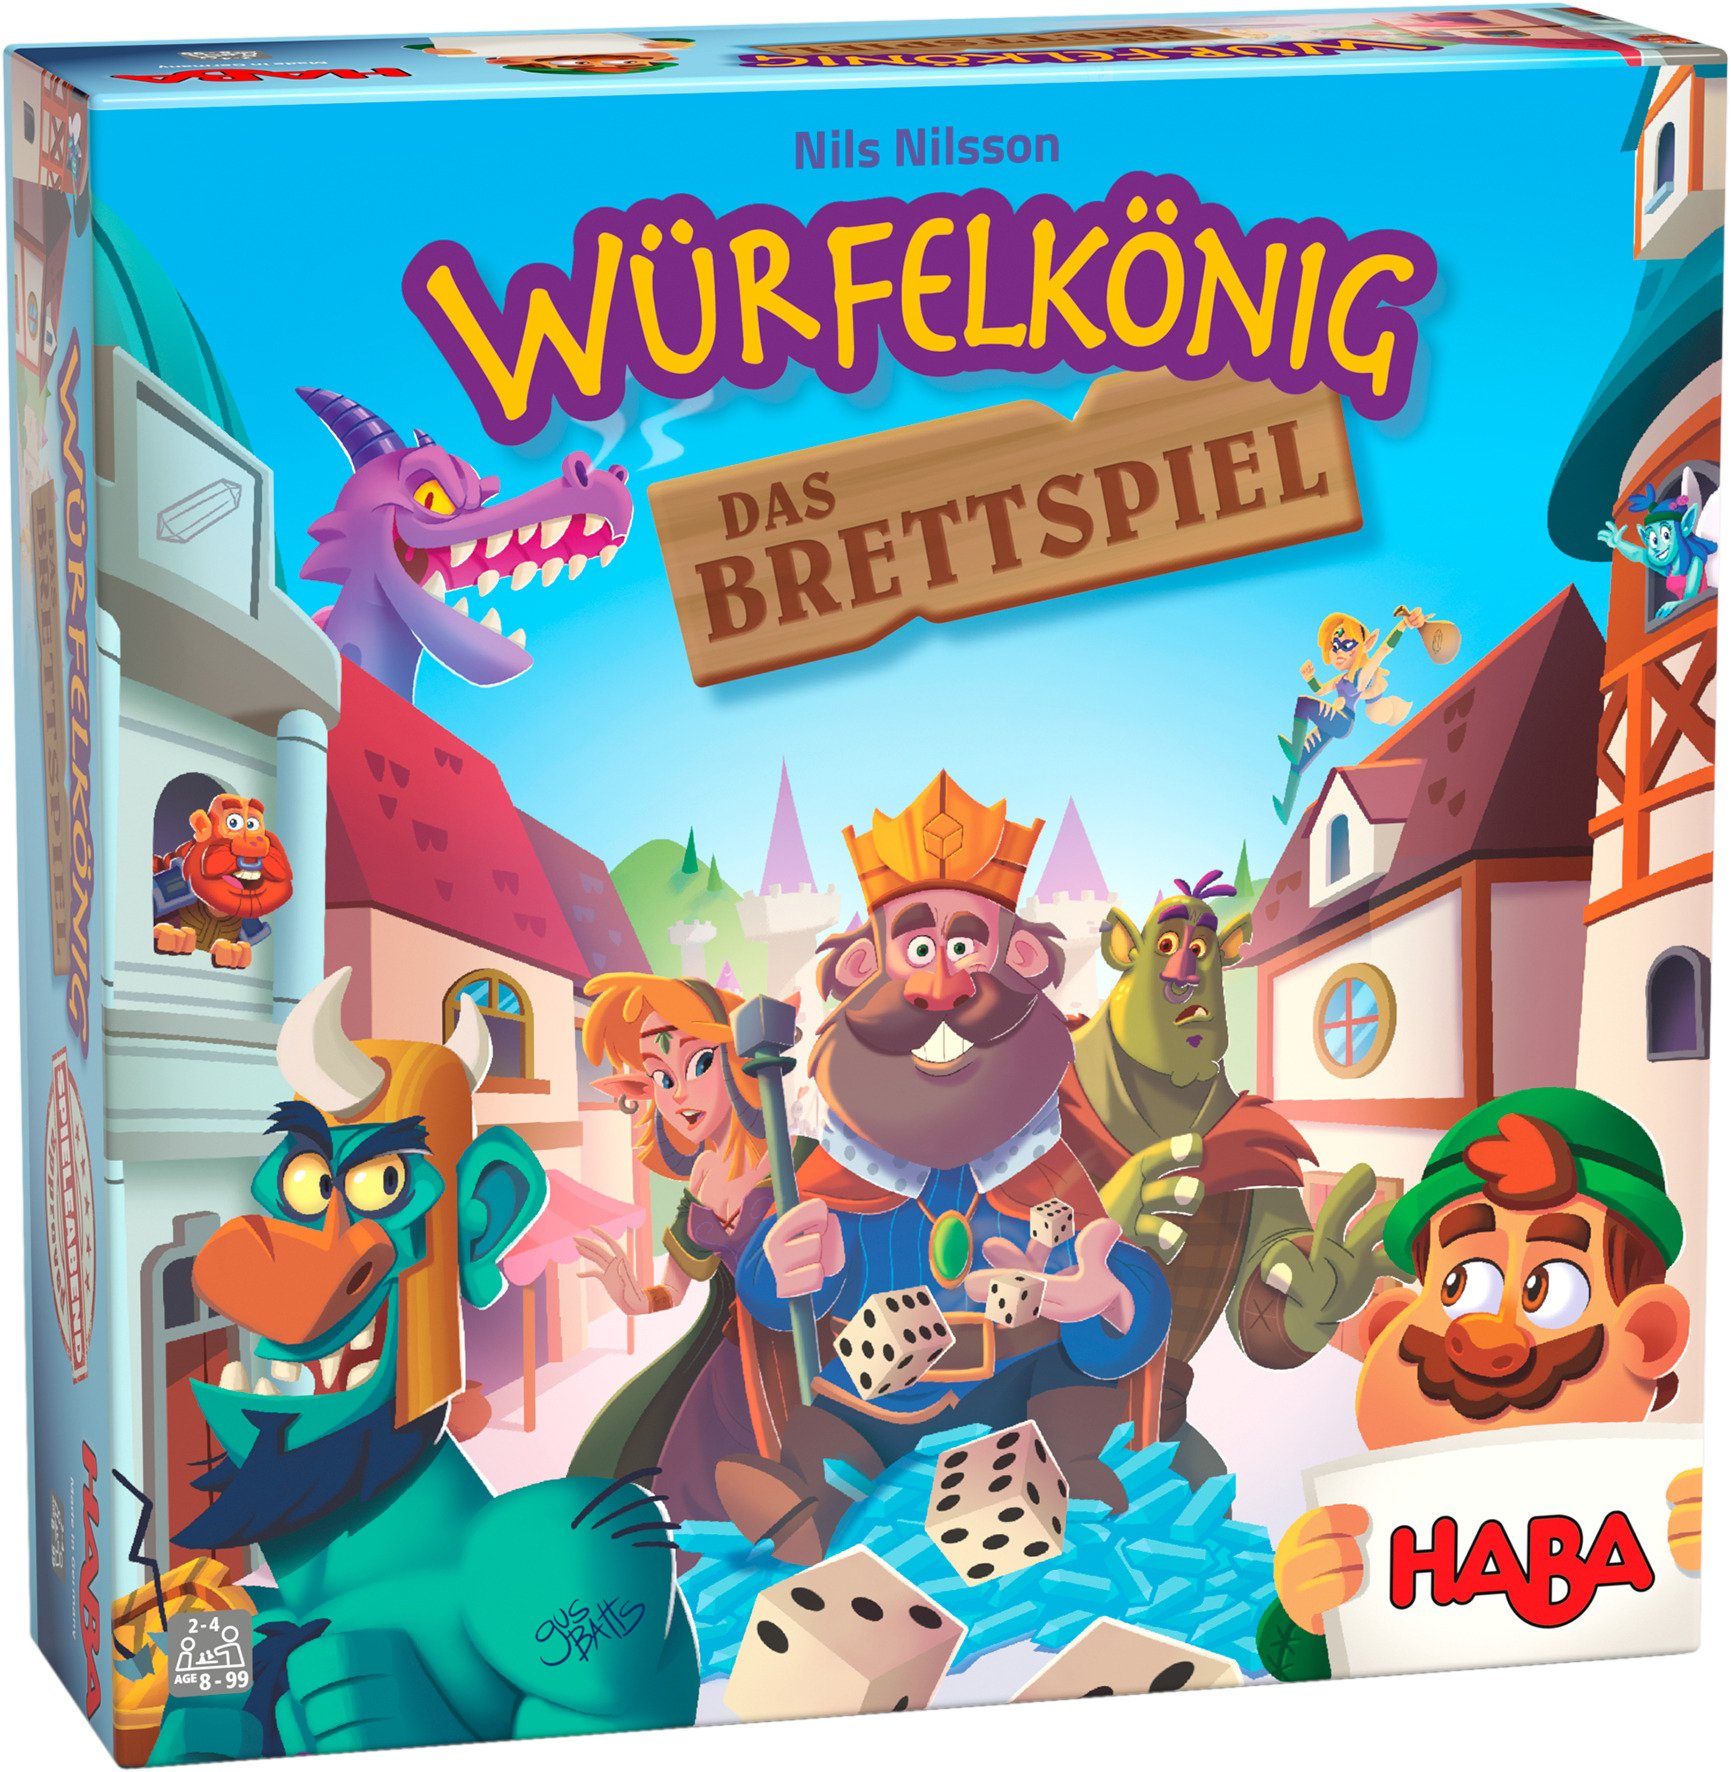 Würfelkönig, Das Brettspiel, Germany Strategiespiel Holzspielzeug, in Spiel, Haba Made